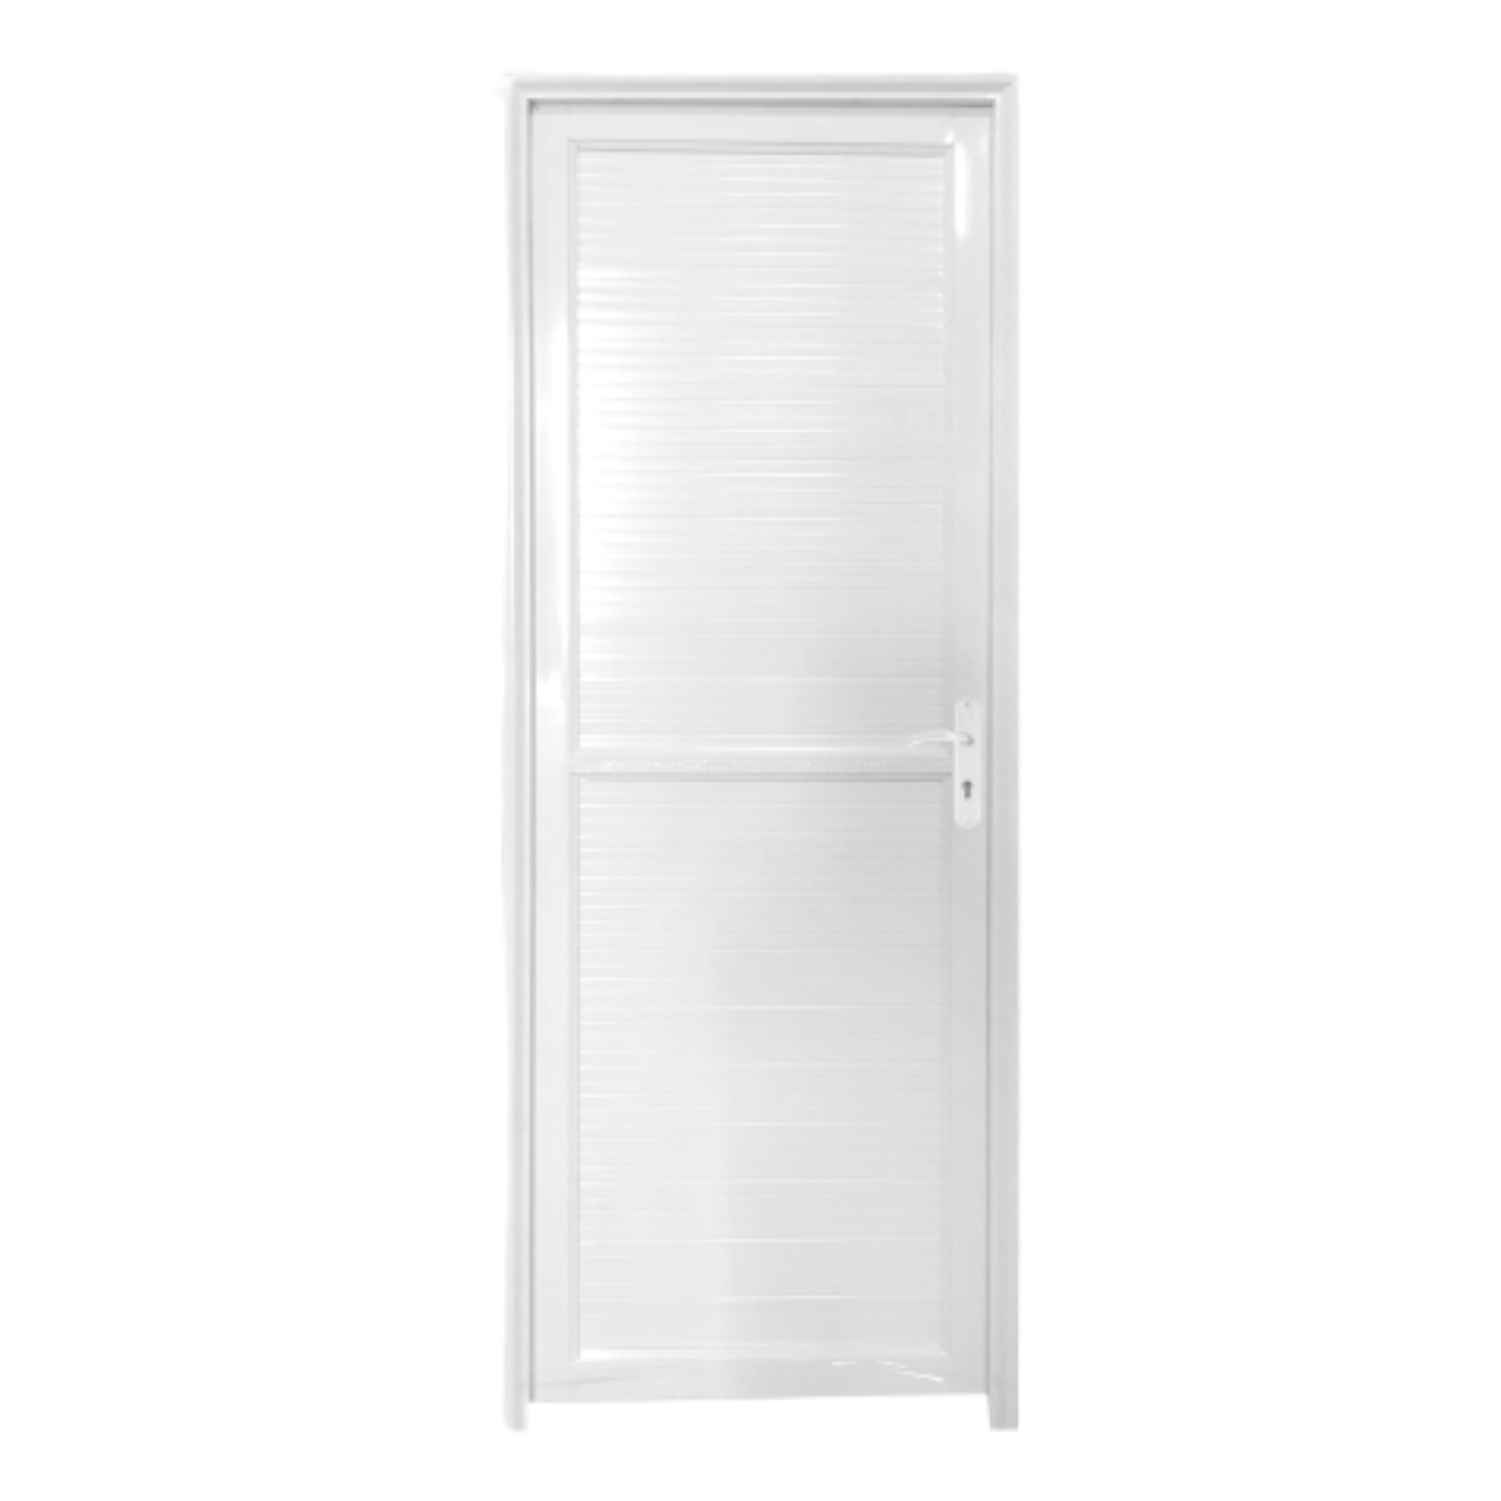 Pintu Kamar ICEPOL IC 008 Alumunium White Kanan Kiri